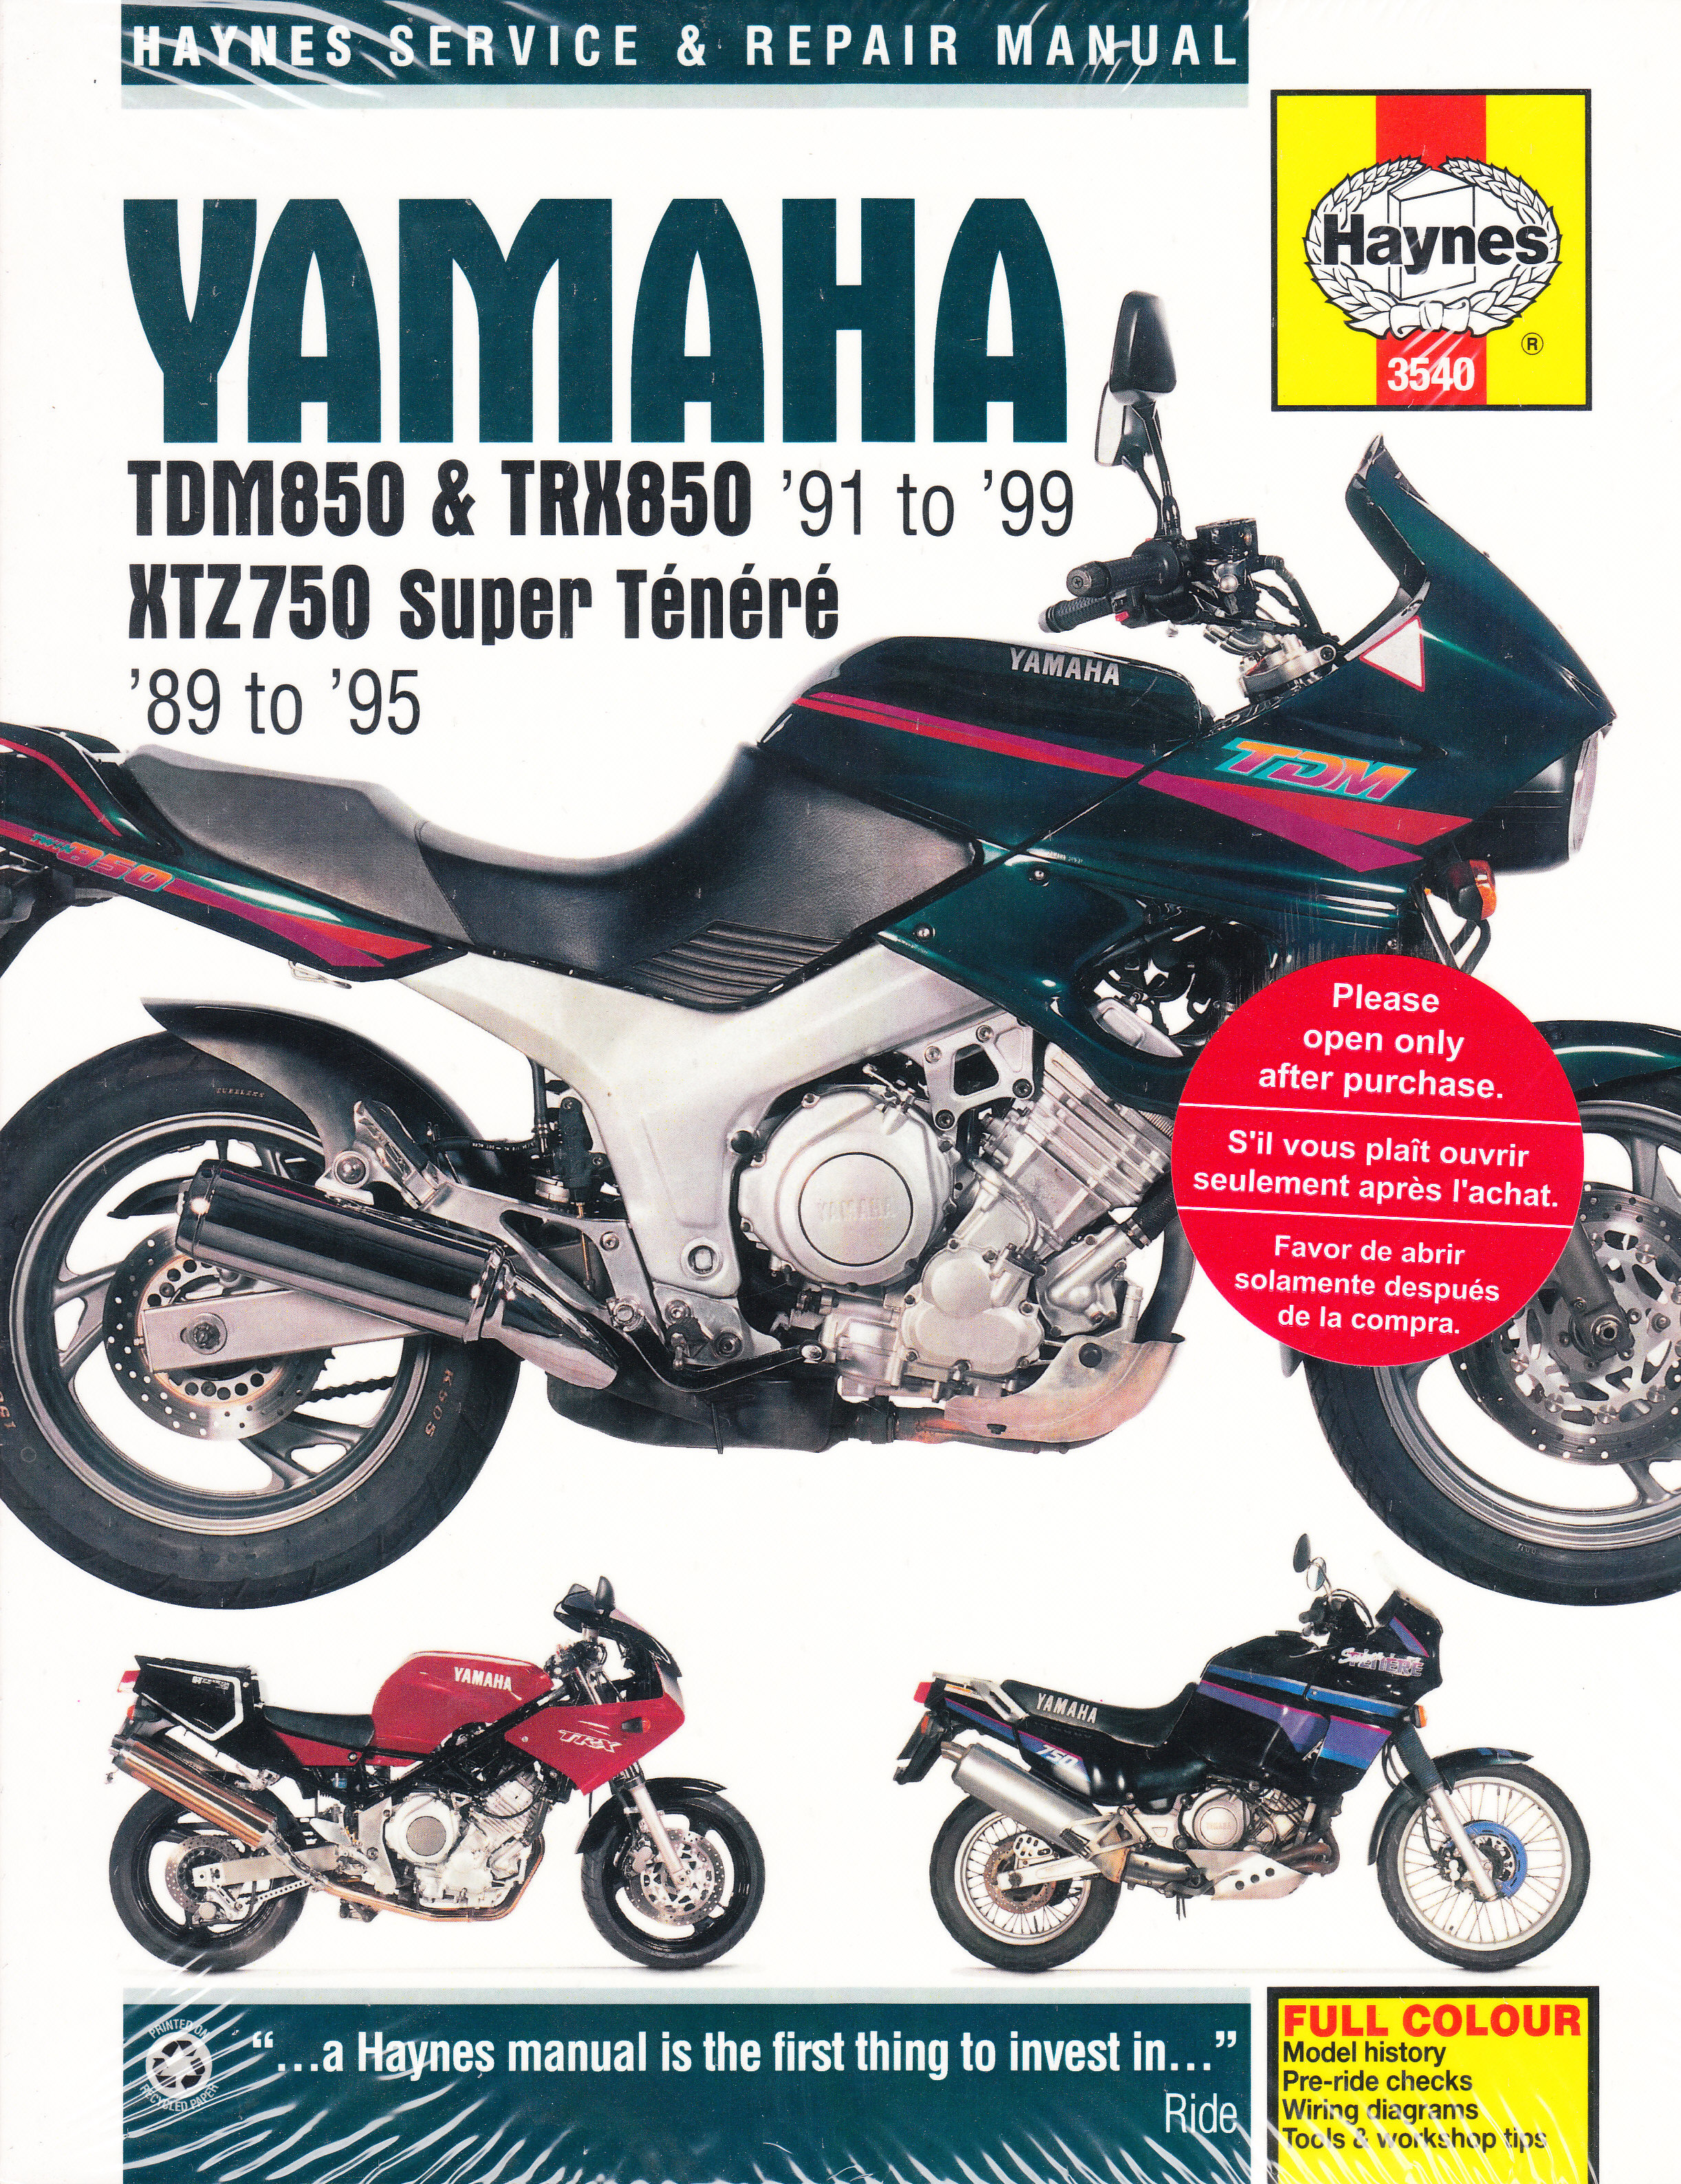 1991 - 1999 Yamaha TDM850, TRX850, 1989 - 1995 XTZ750 Super Tenere Haynes Repair Manual